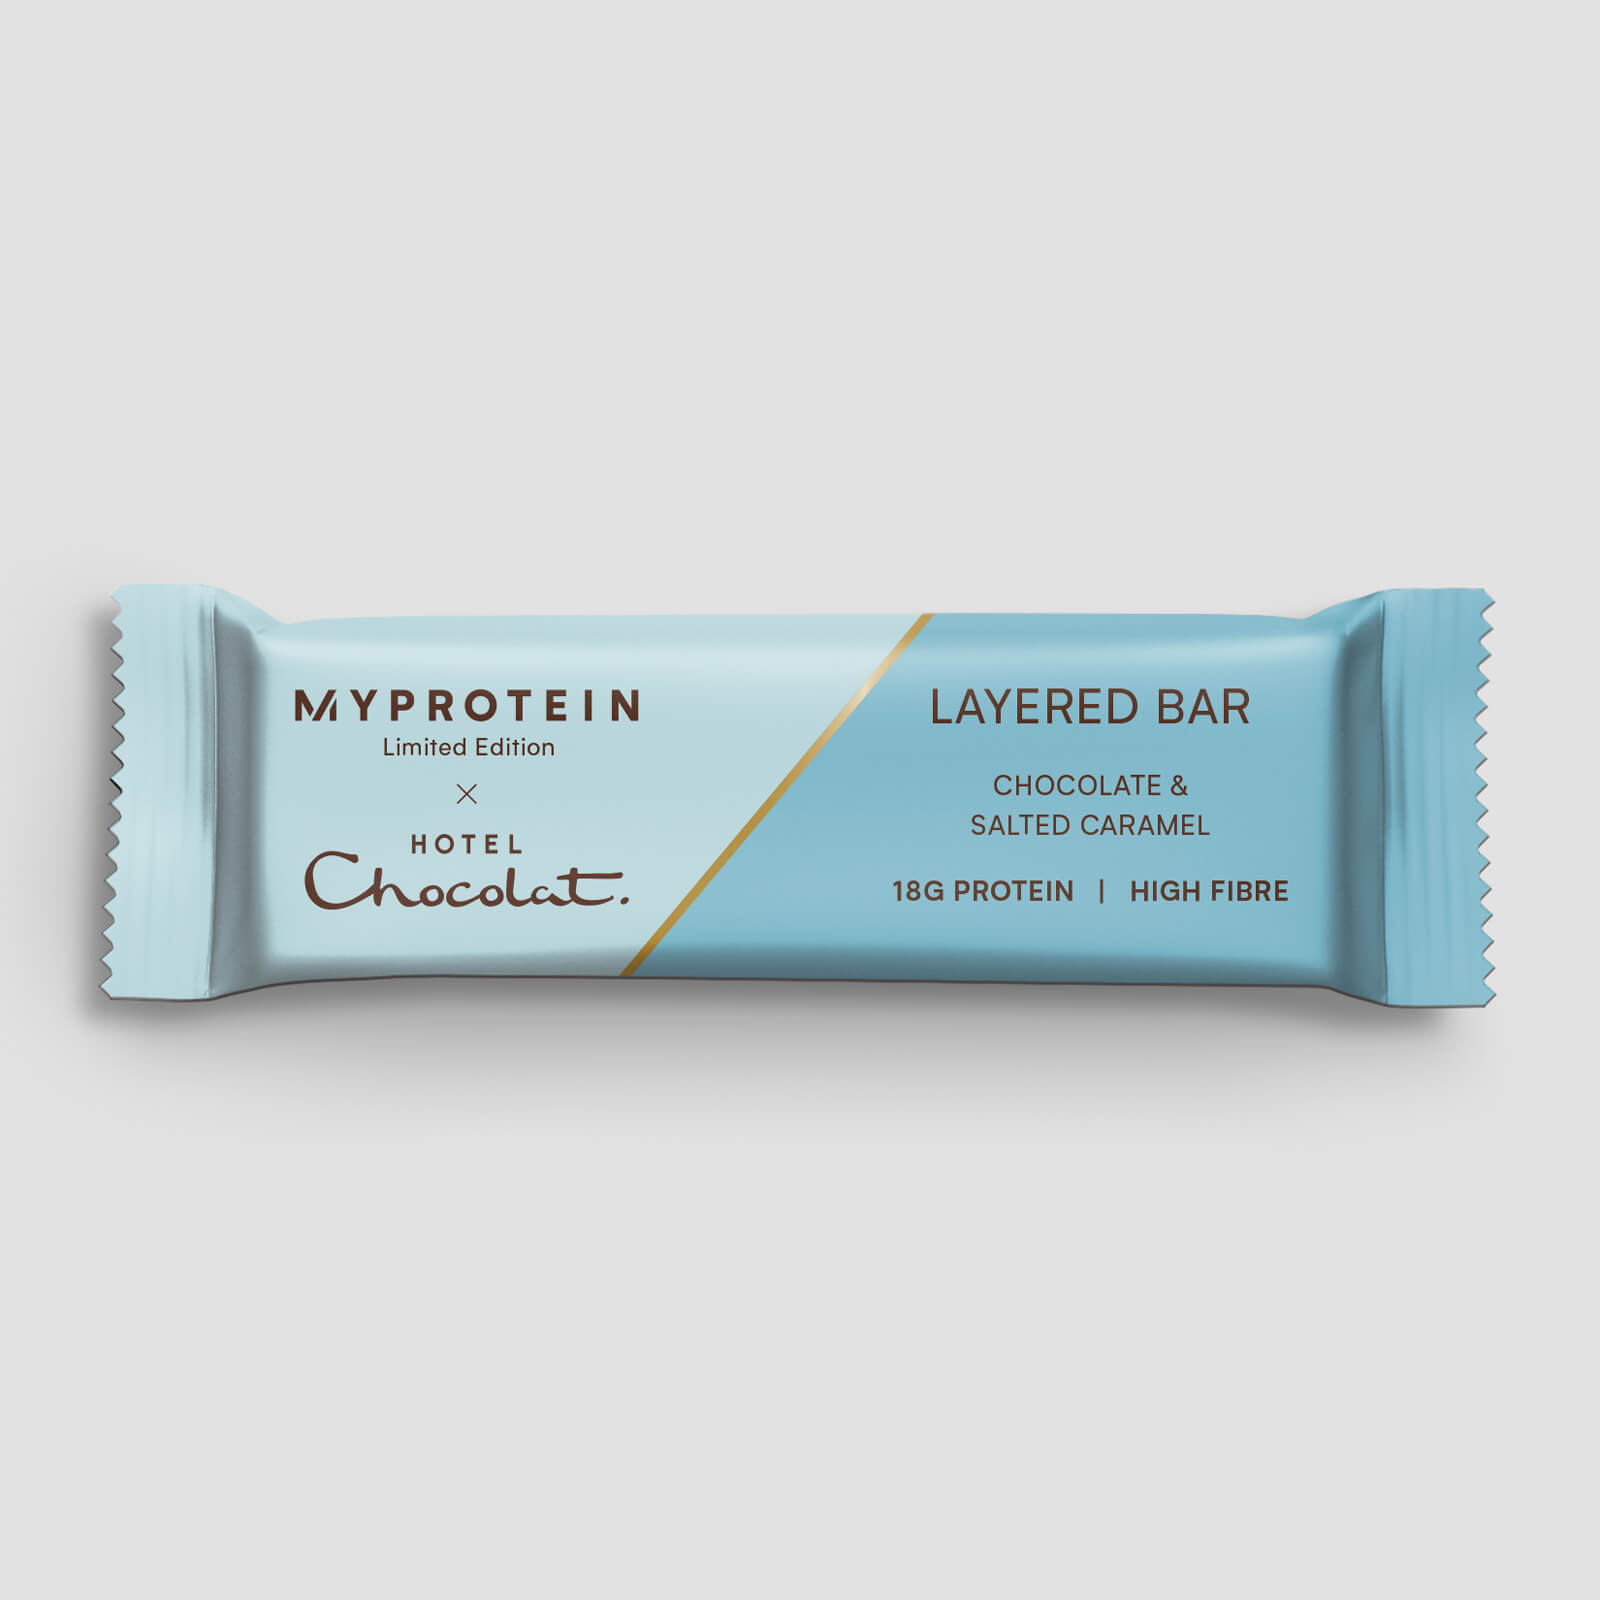 Myprotein X Hotel Chocolat Salted Caramel Layered Bar Sample